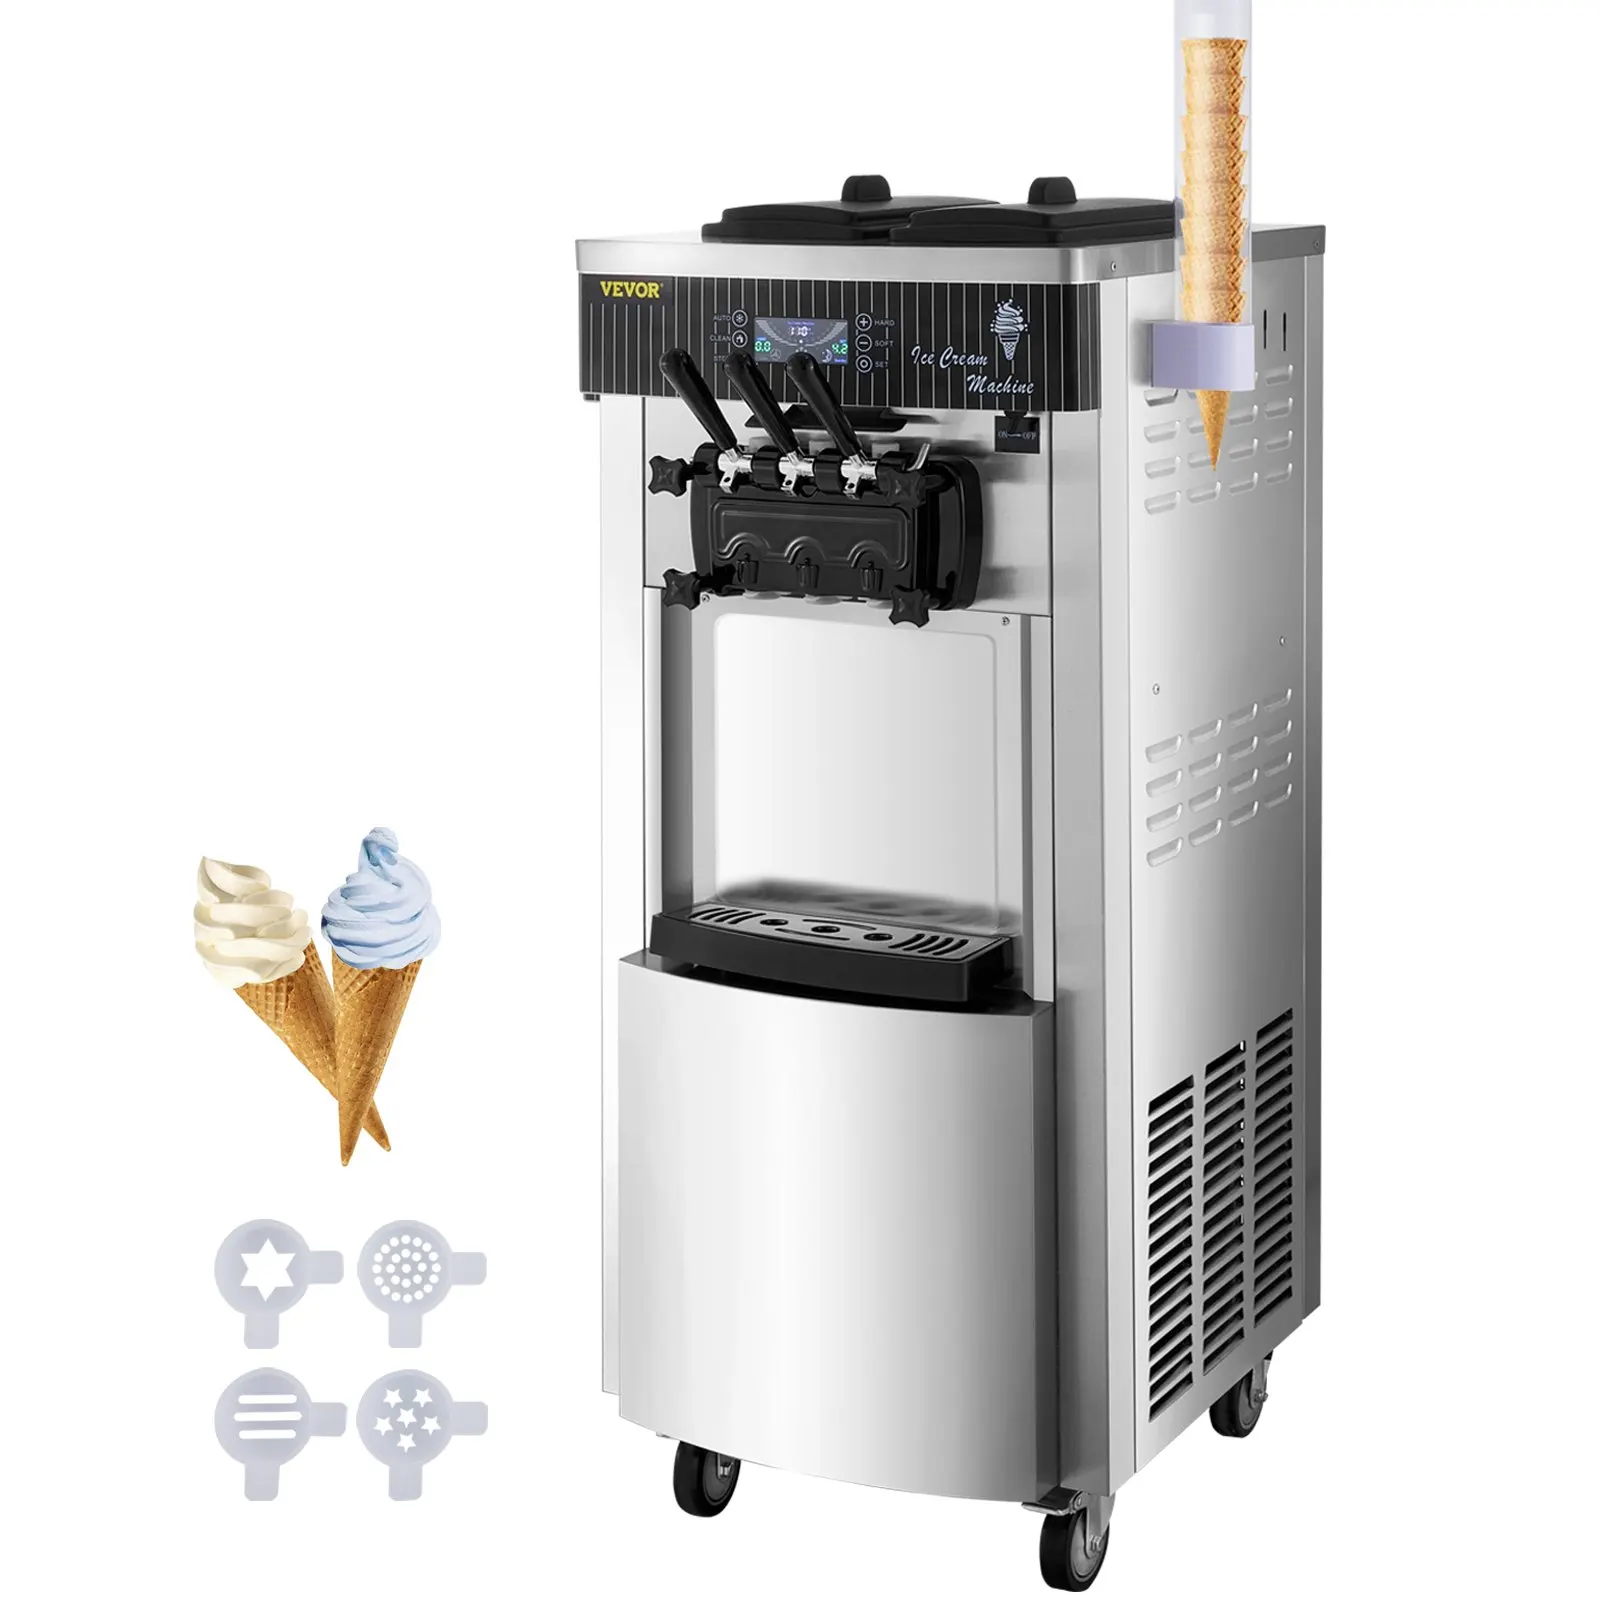 

VEVOR Commercial Soft Ice Cream Machine, 2200W Serve Yogurt Maker, 3 Flavors Ice Cream Maker, 5.3 to 7.4 Gallons per Hour